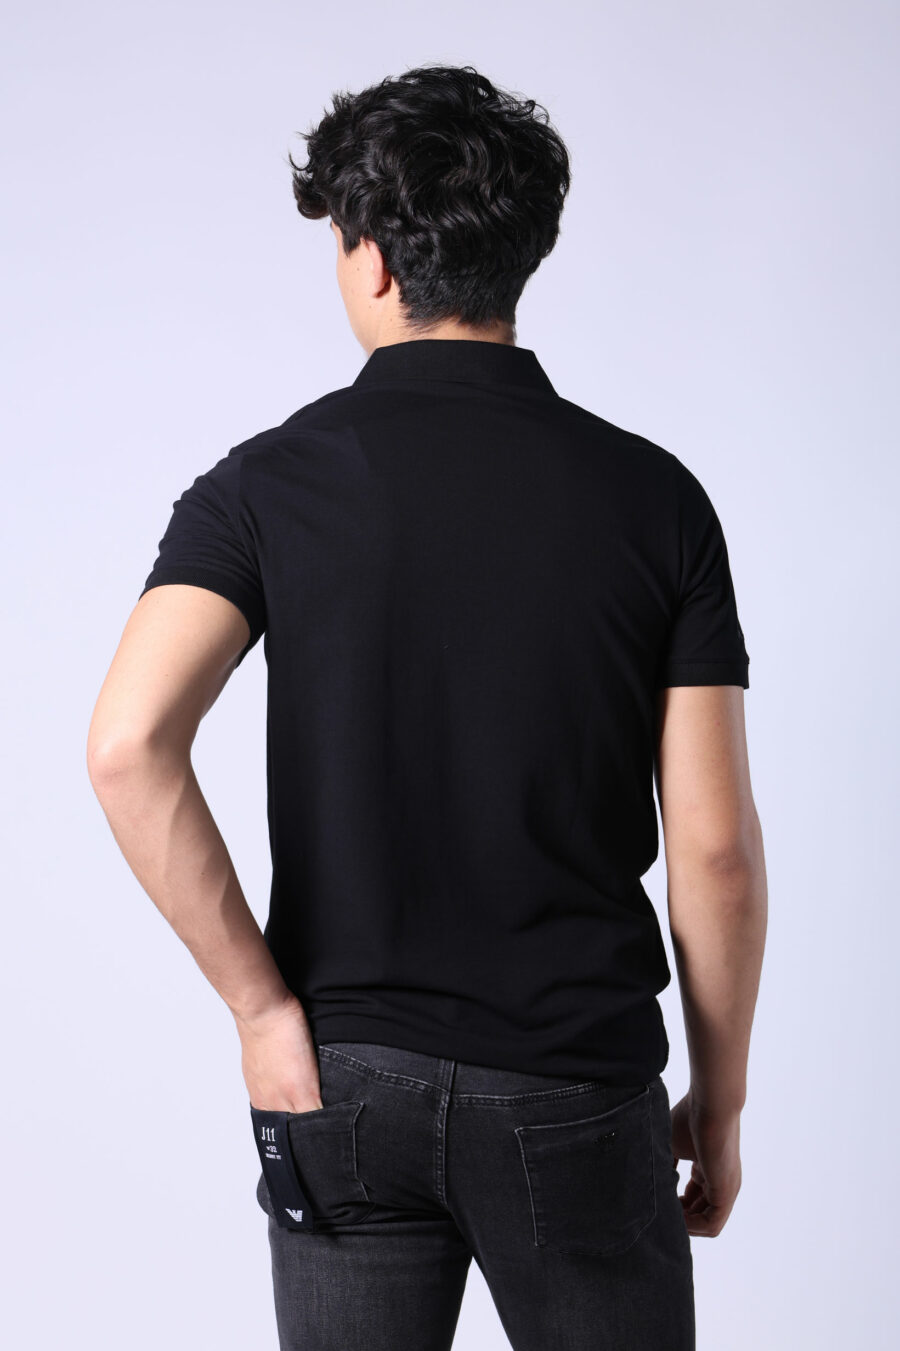 Black polo shirt with monochrome mini-logo - Untitled Catalog 05718